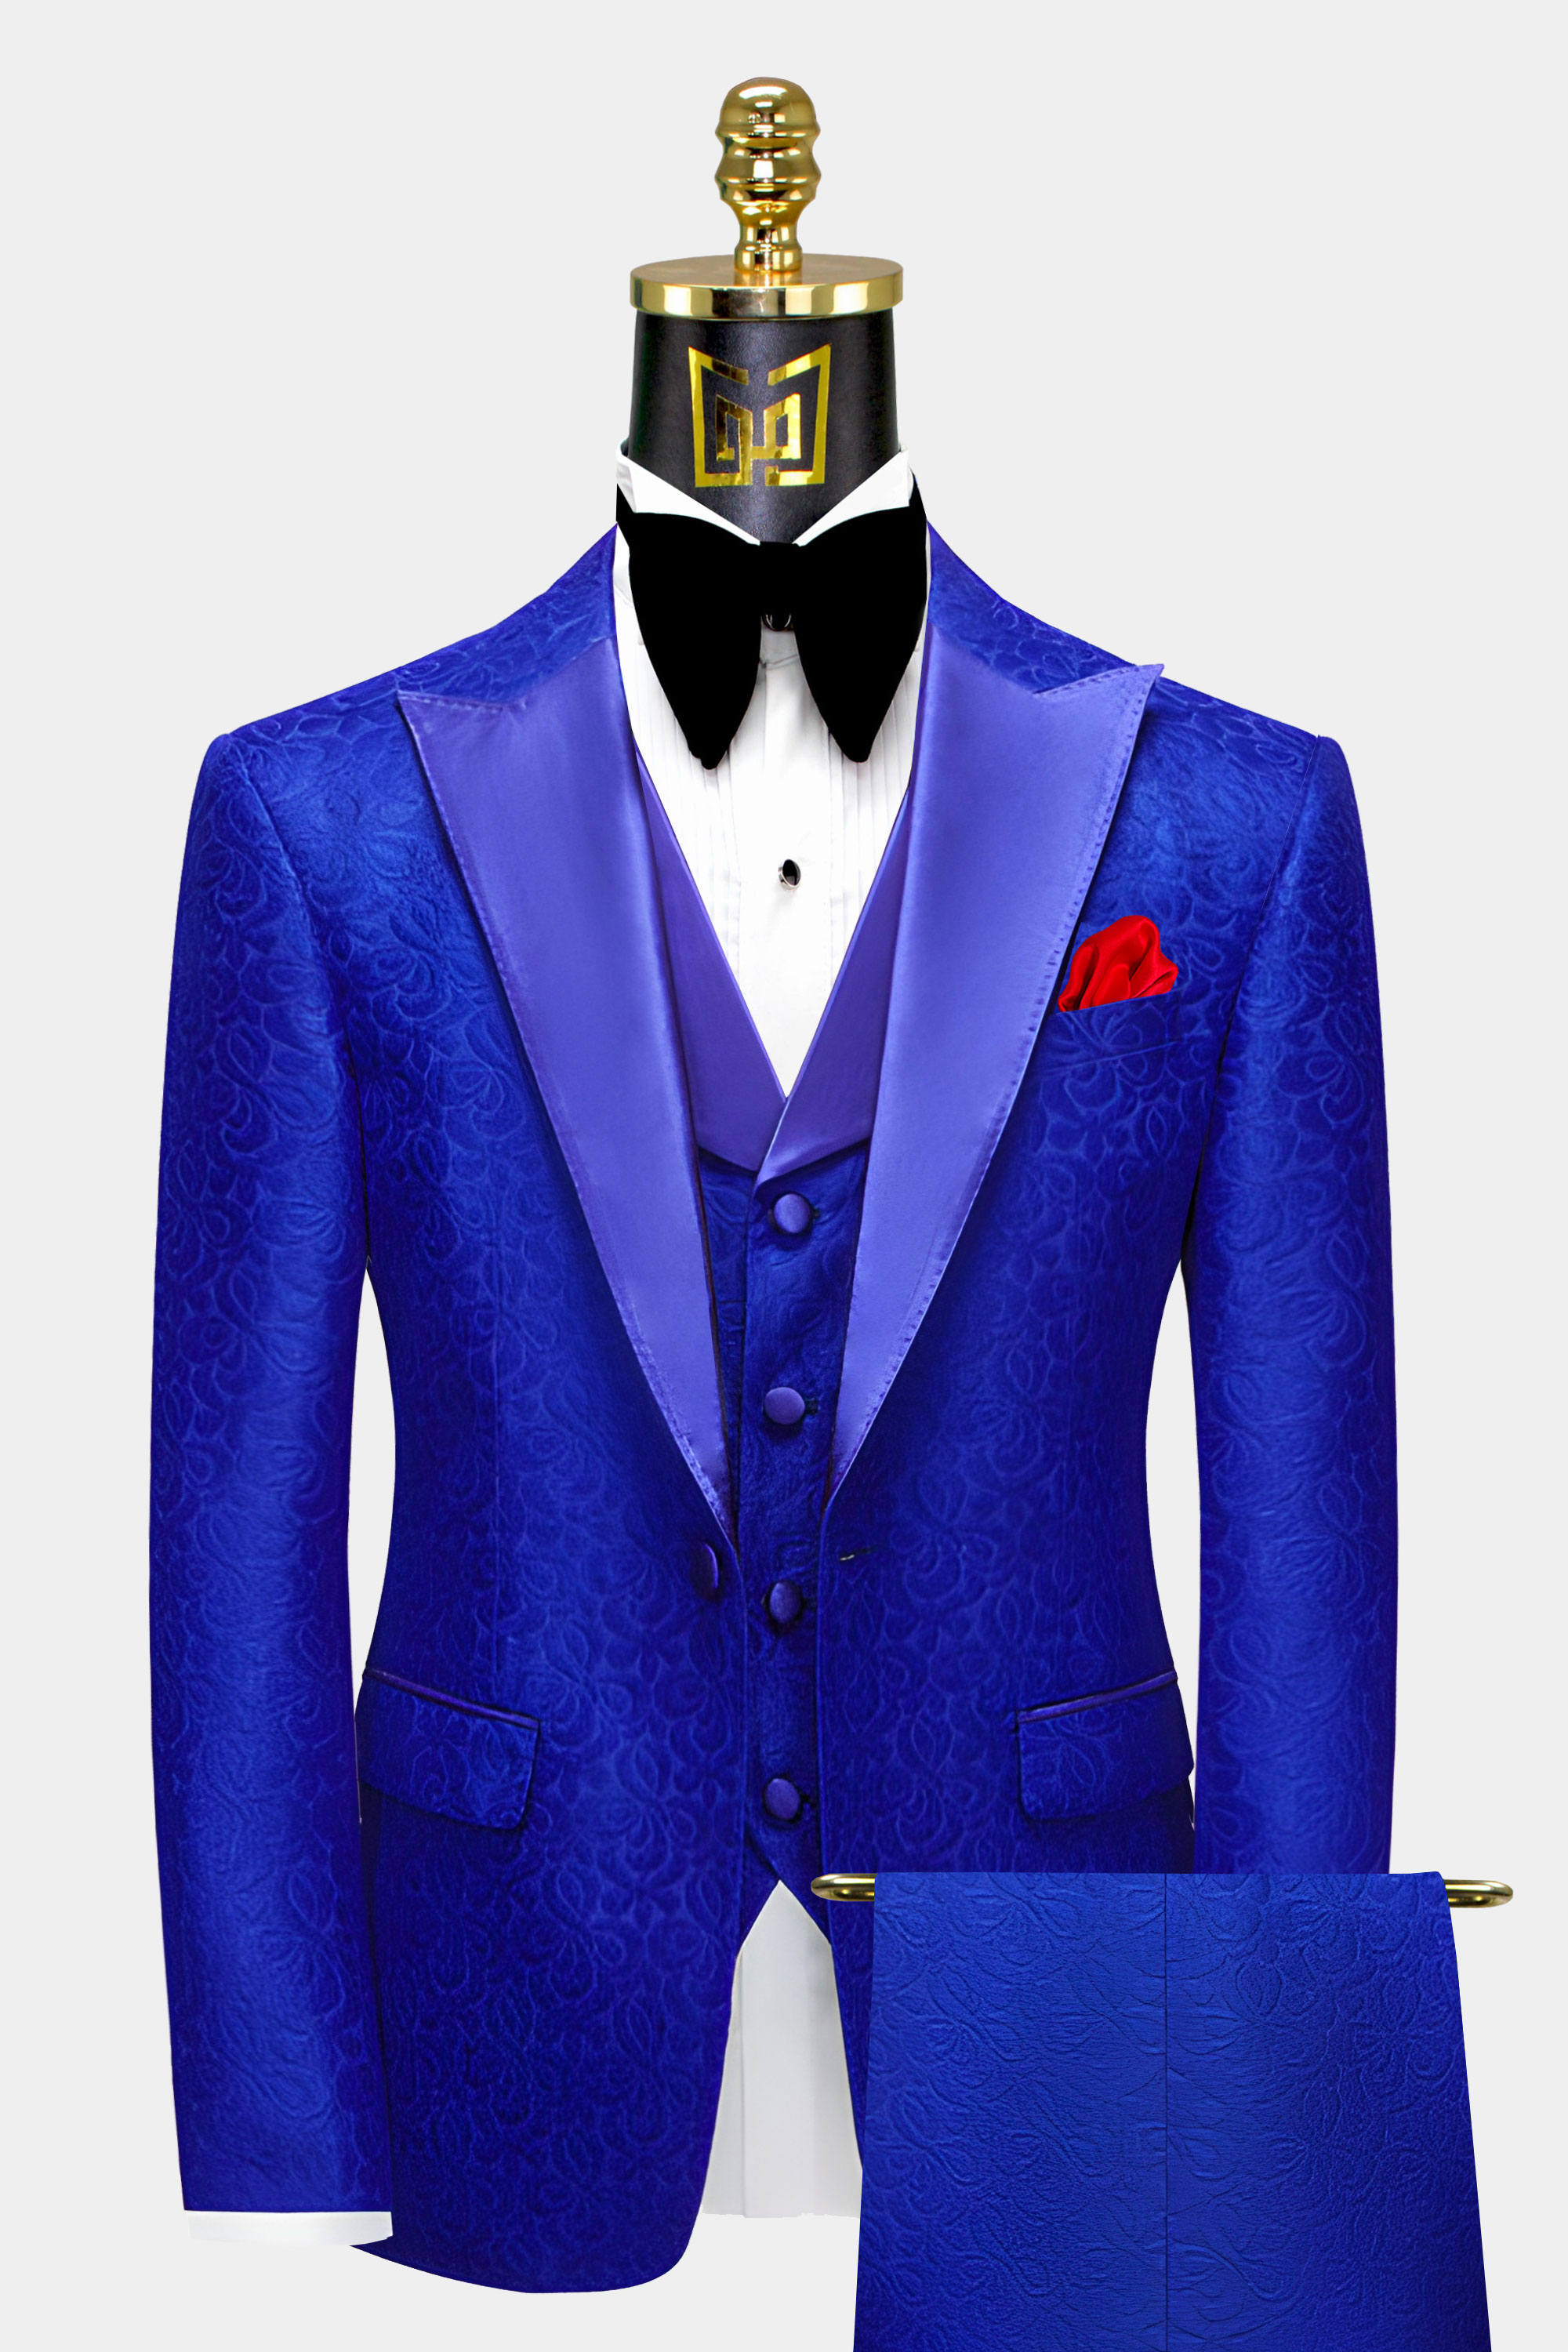 Mens-Indigo-Blue-Tuxedo-Groom-Wedding-Prom-Suit-from-Gentlemansguru.com